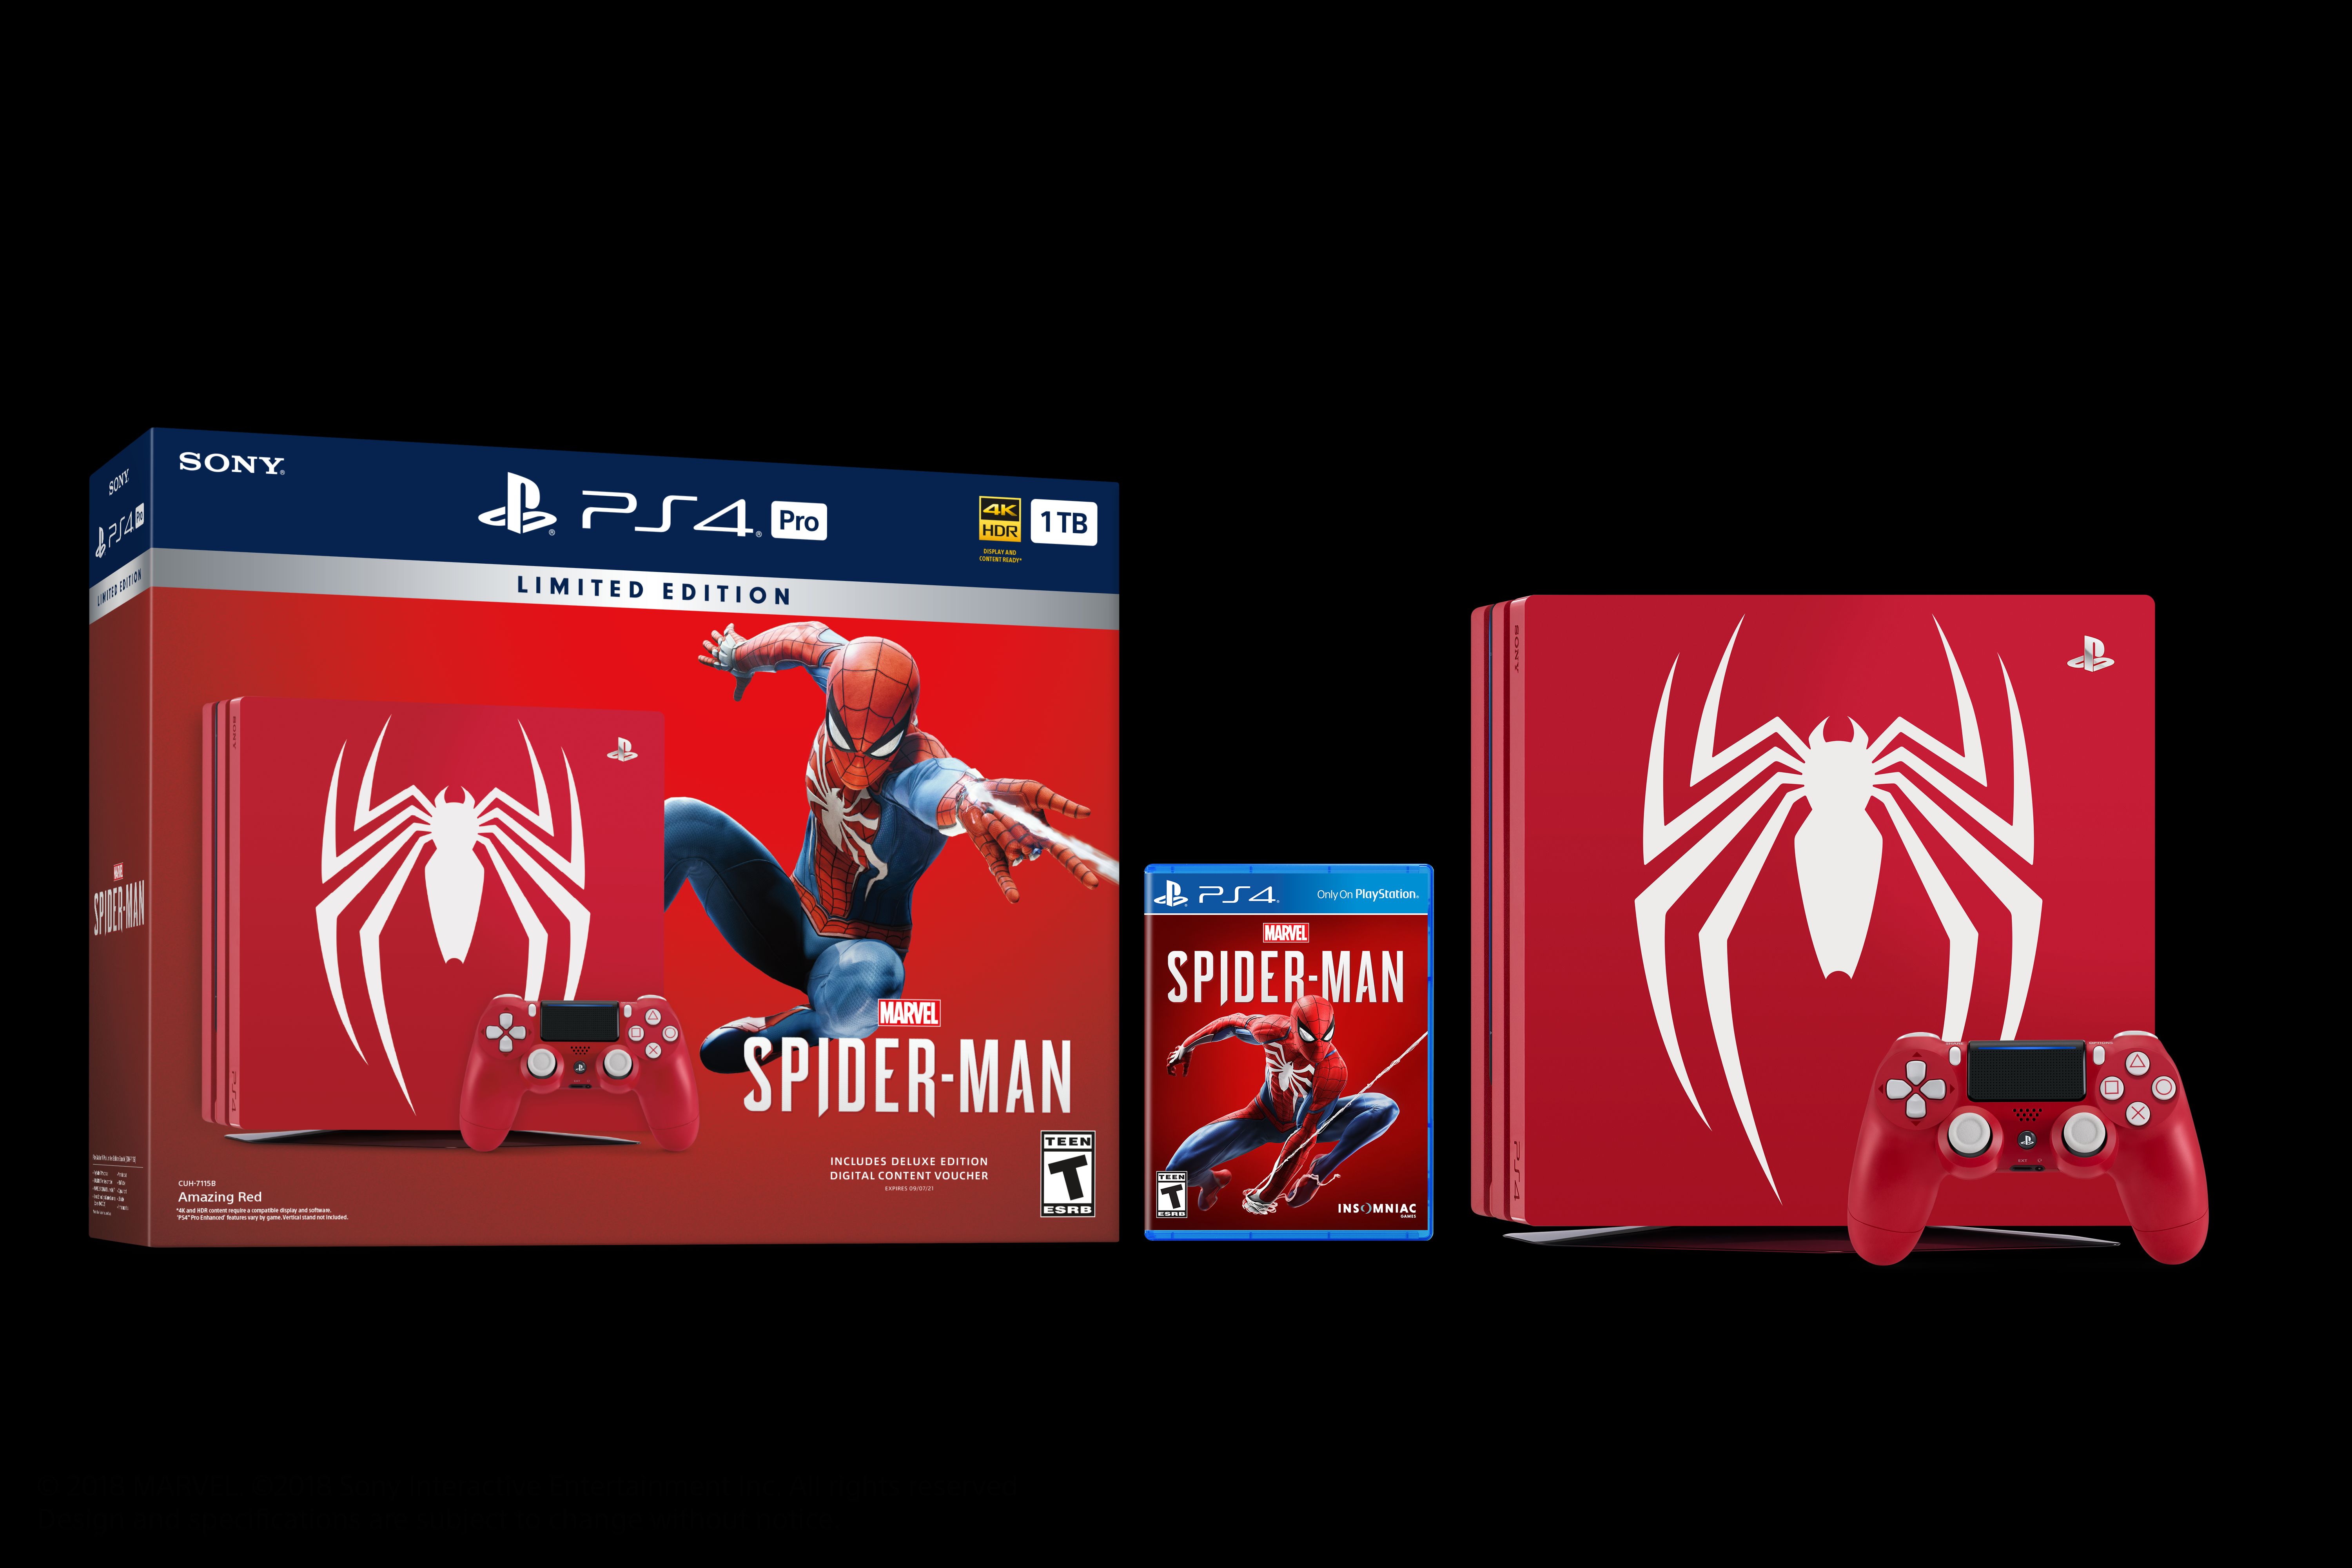 Паук 2 на пс 4. PLAYSTATION 4 Limited Edition человек паук. PLAYSTATION 4 Pro Spider man Limited Edition. Marvel Spider man ps4 диск. Ps4 Spider man консоль.